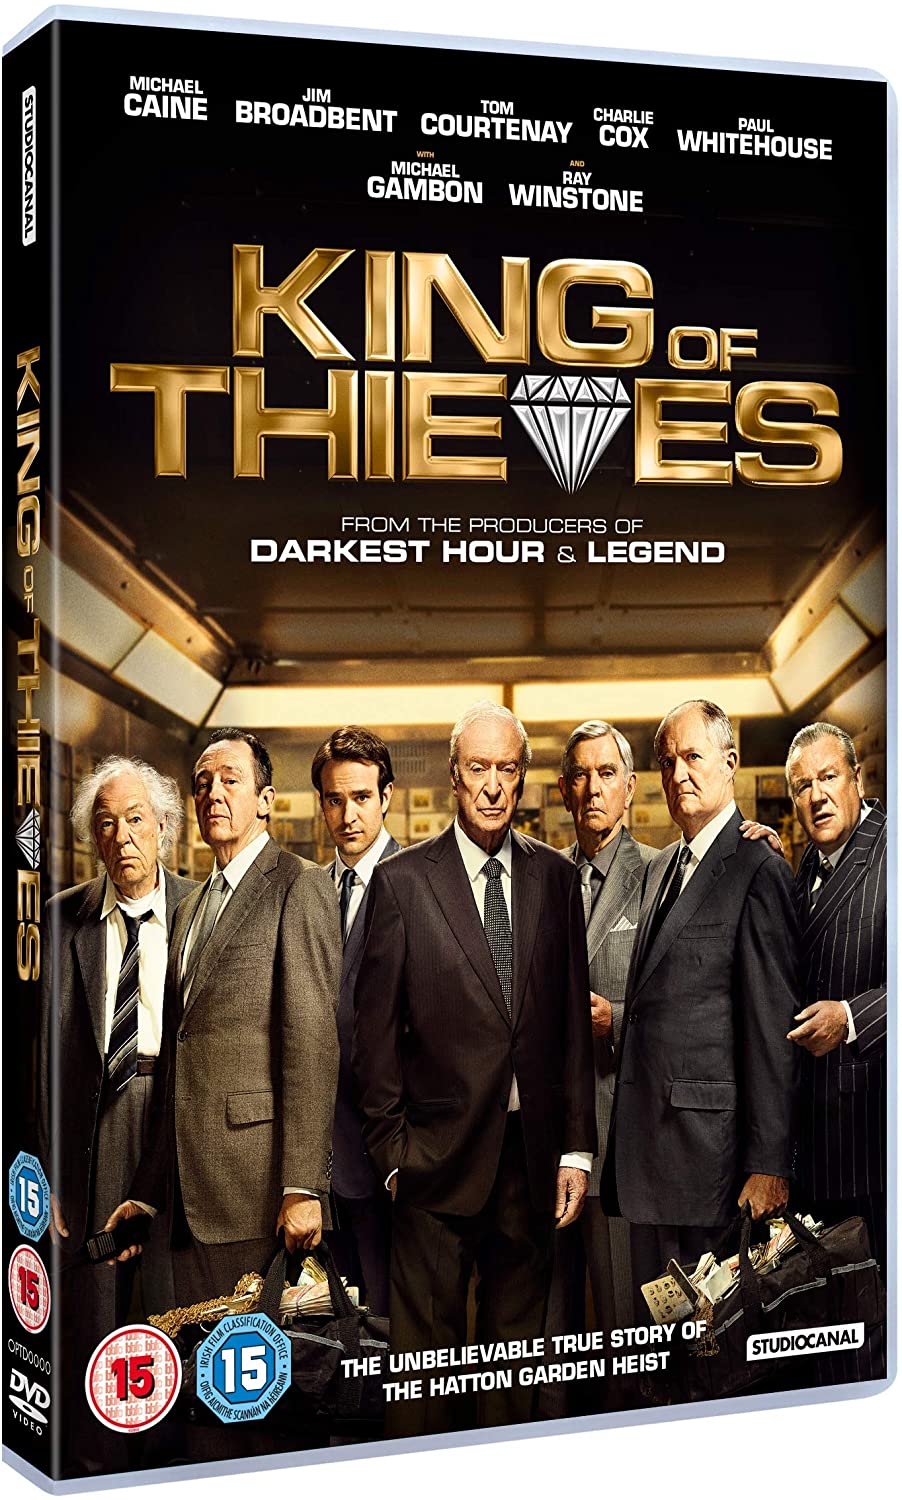 King of Thieves - Crime/Drama [DVD]